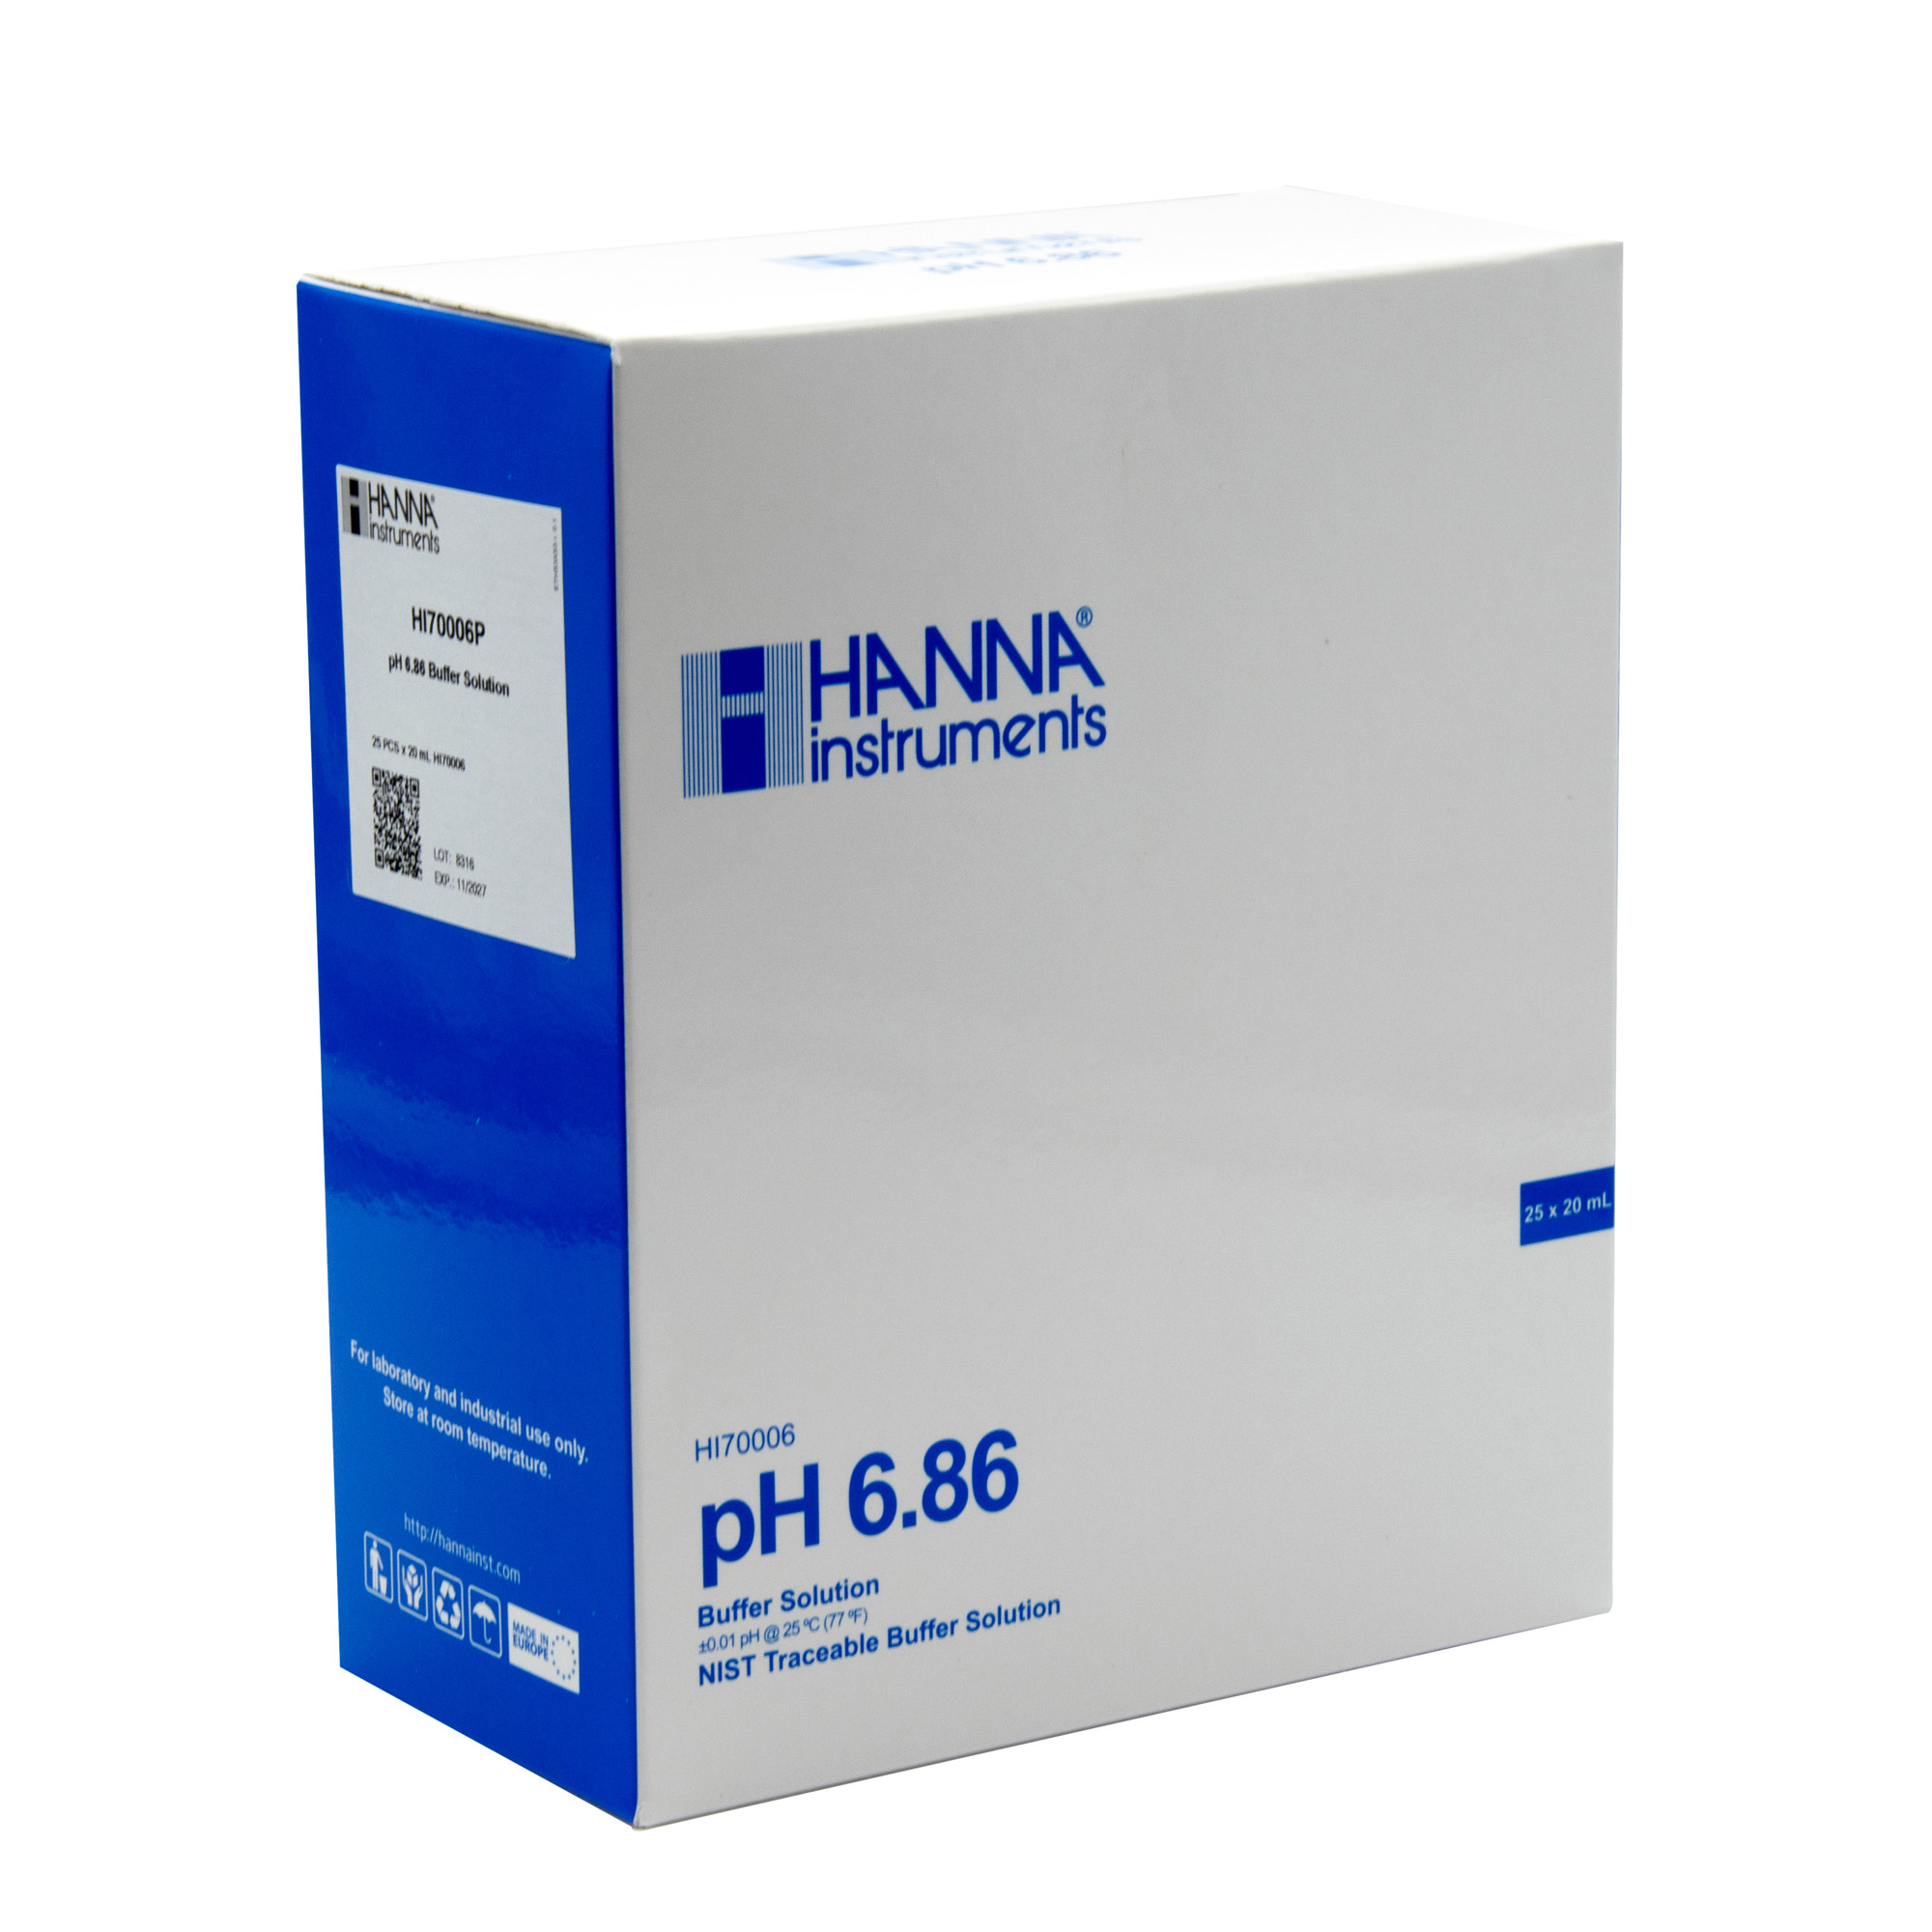 HANNA buffer solution pH 6.86, 25 x 20mL sachets (HI70006P)